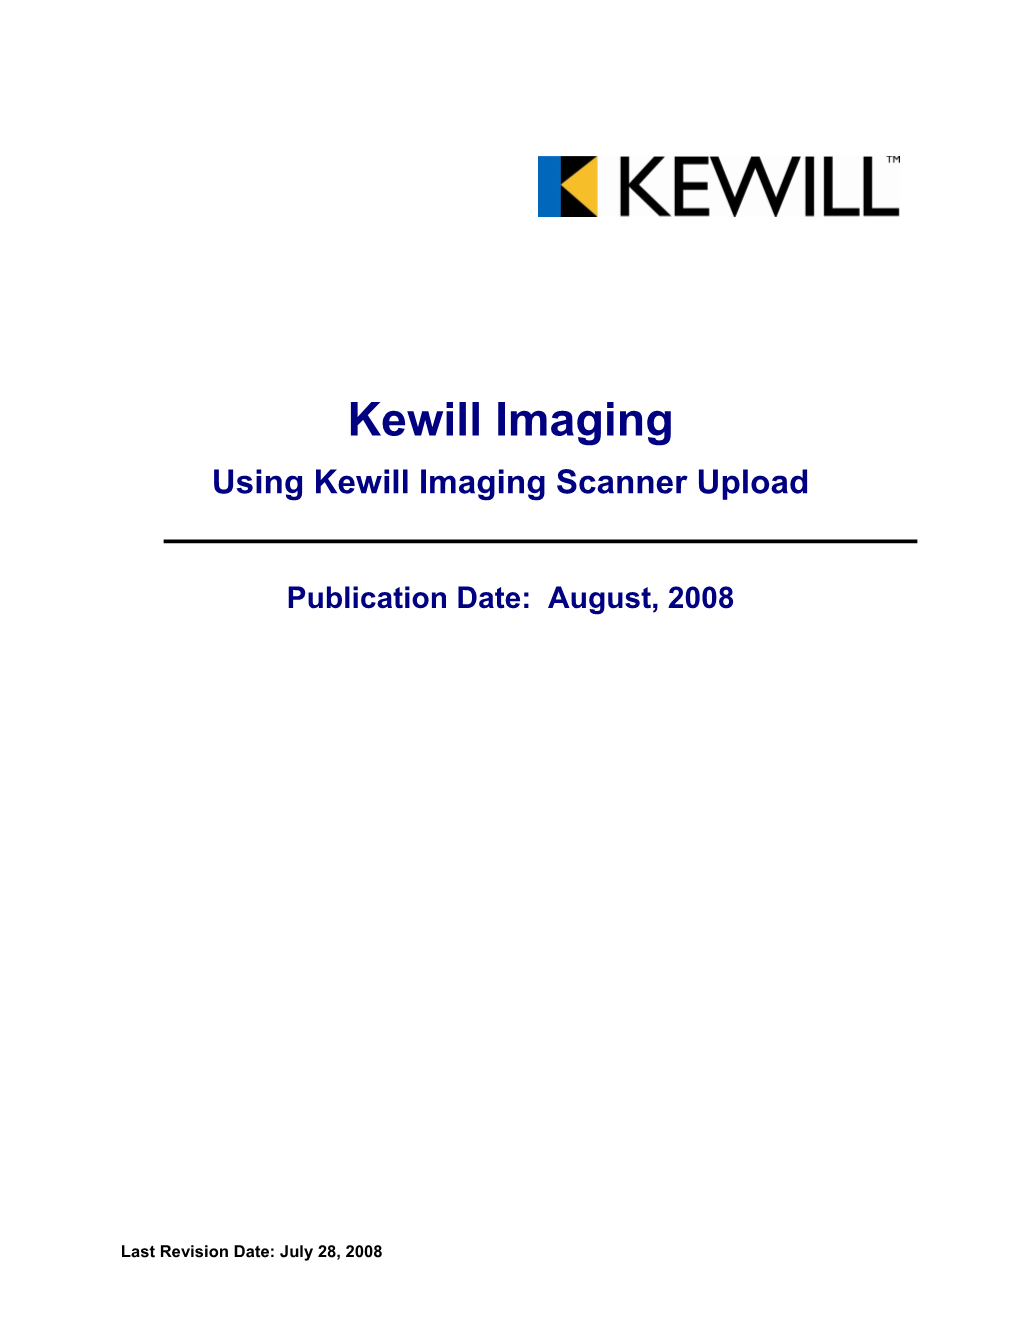 Using Kewill Scanner Upload